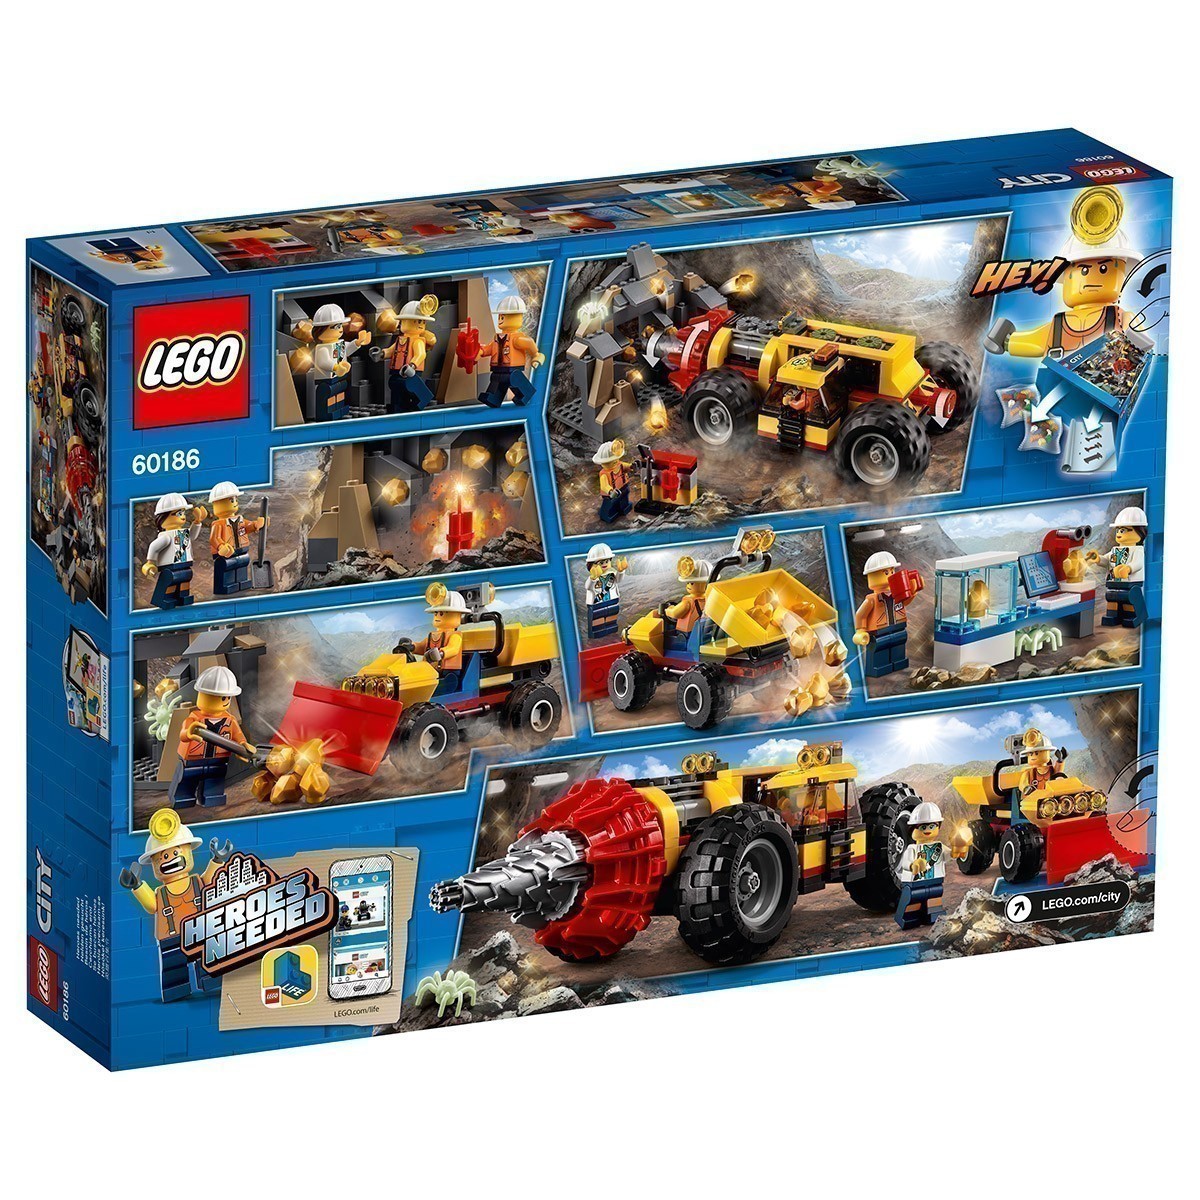 LEGO® City - 60186 Mining Heavy Driller